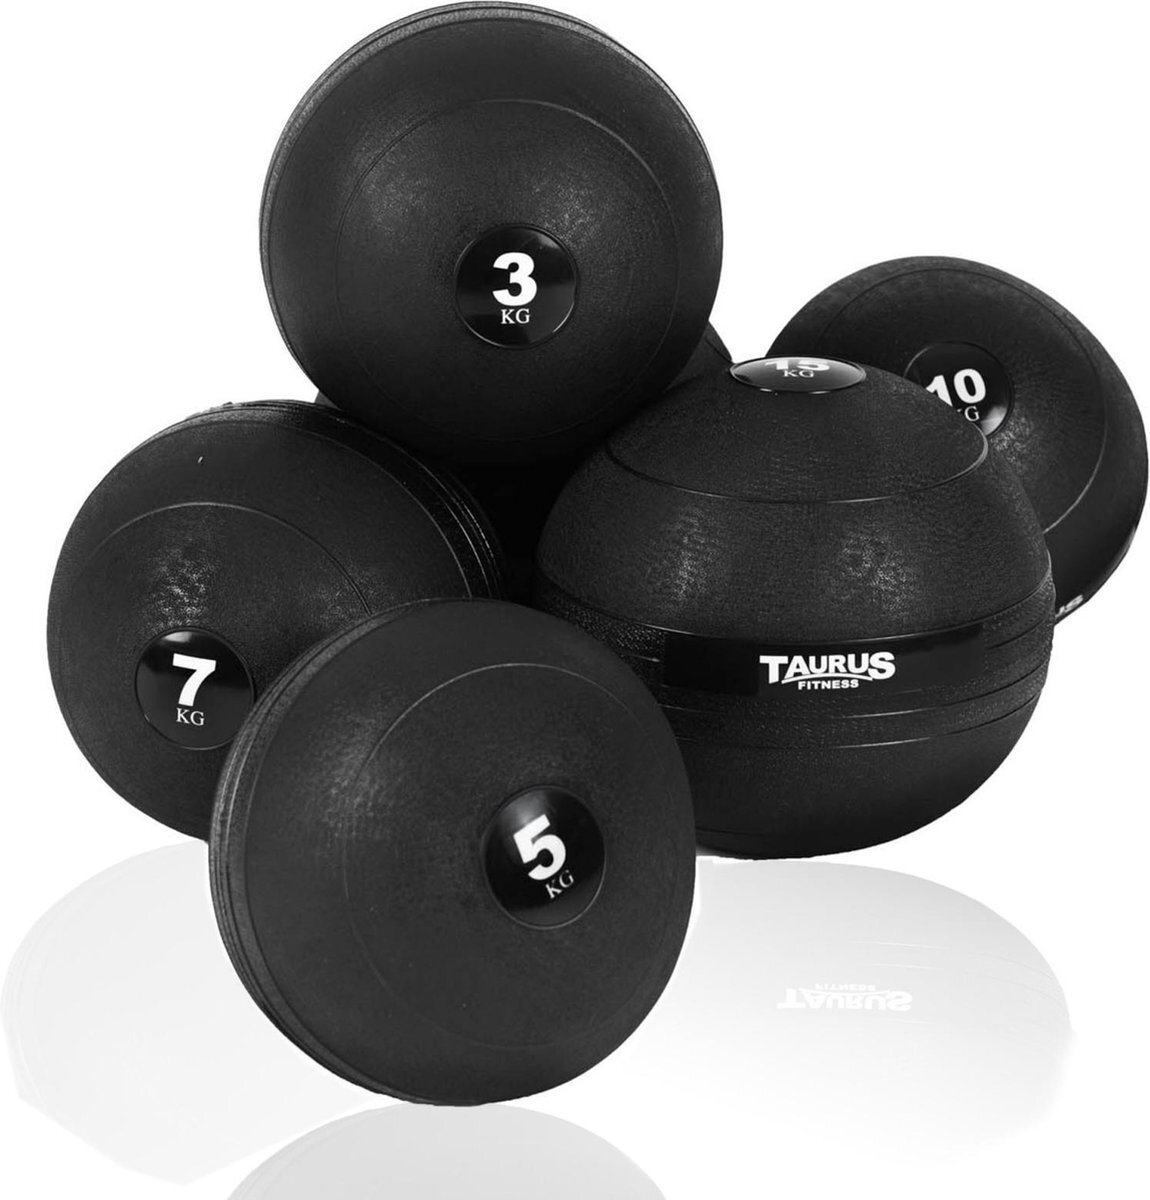 Taurus Slam Ball 10 kg - functionele training van kracht, lenigheid en uithoudingsvermogen